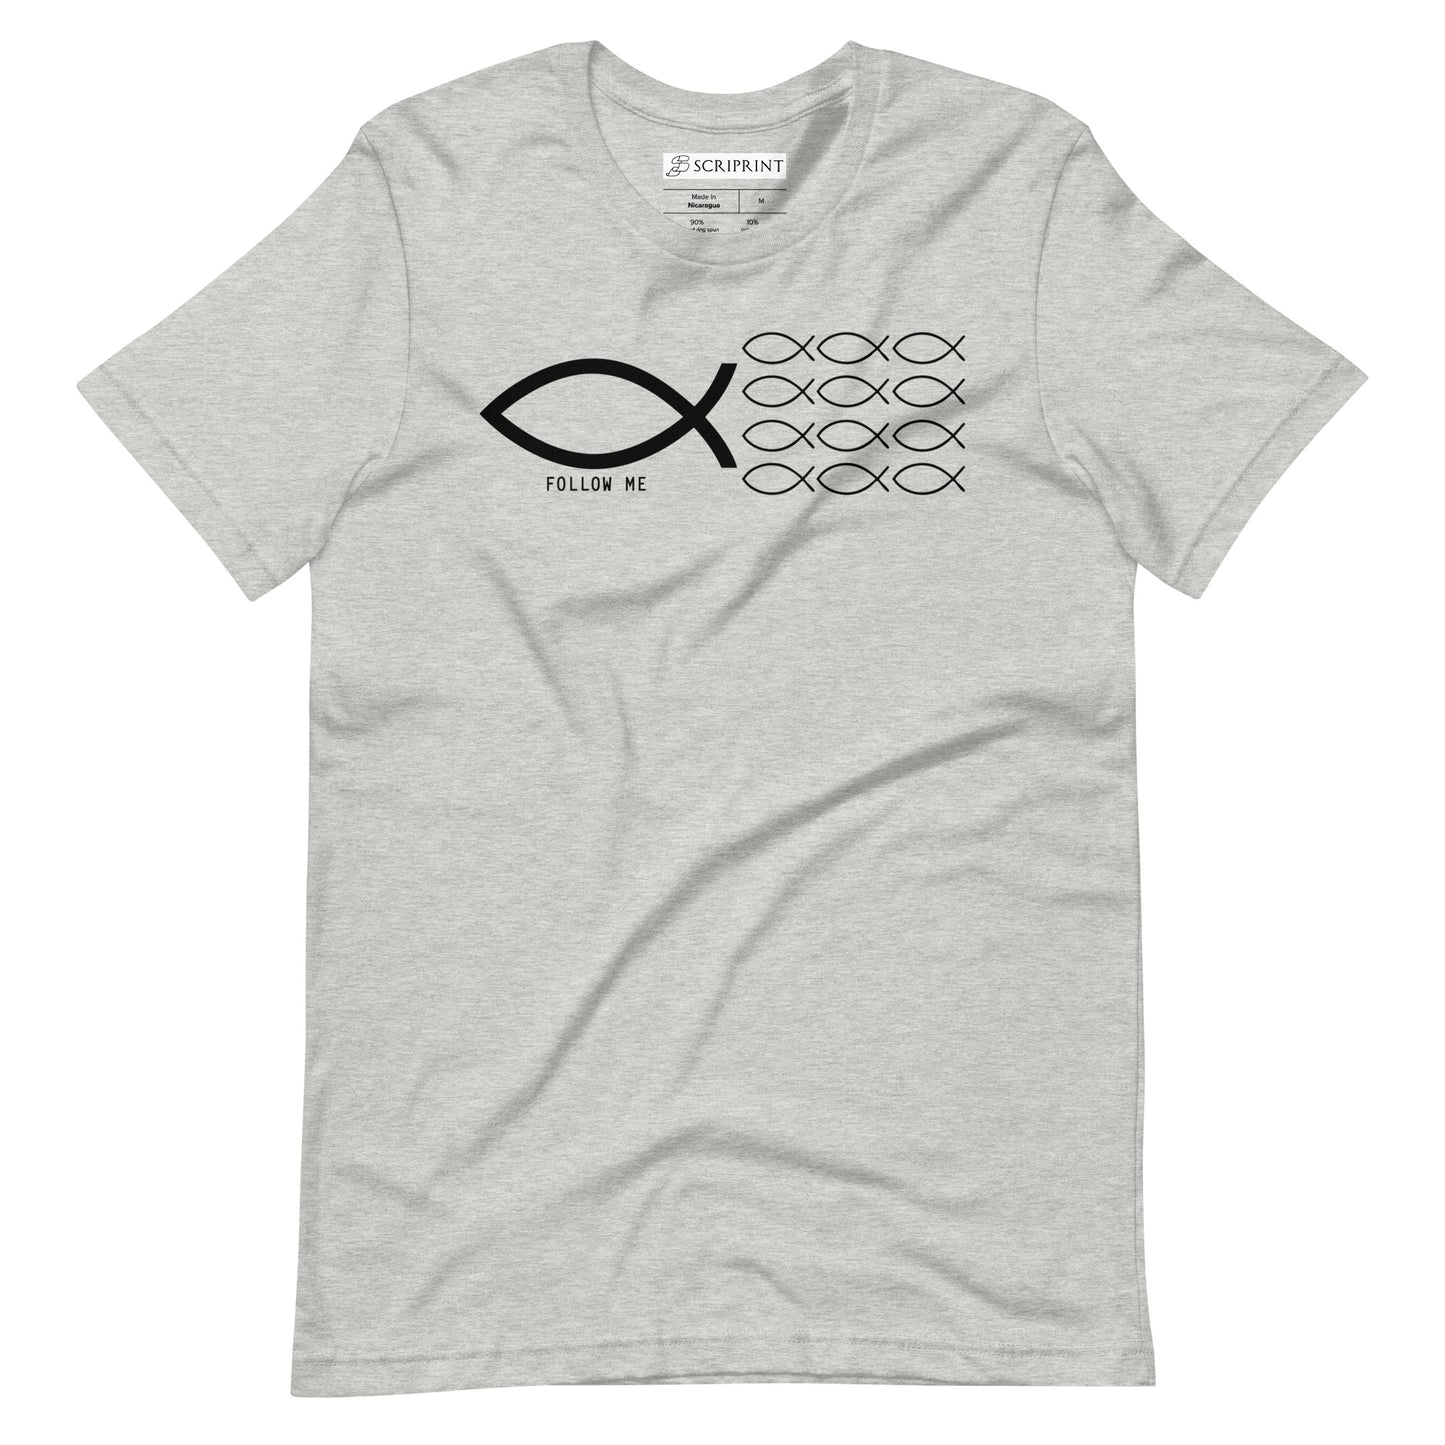 Follow Me (Light-Colored) Short-Sleeve Unisex T-Shirt